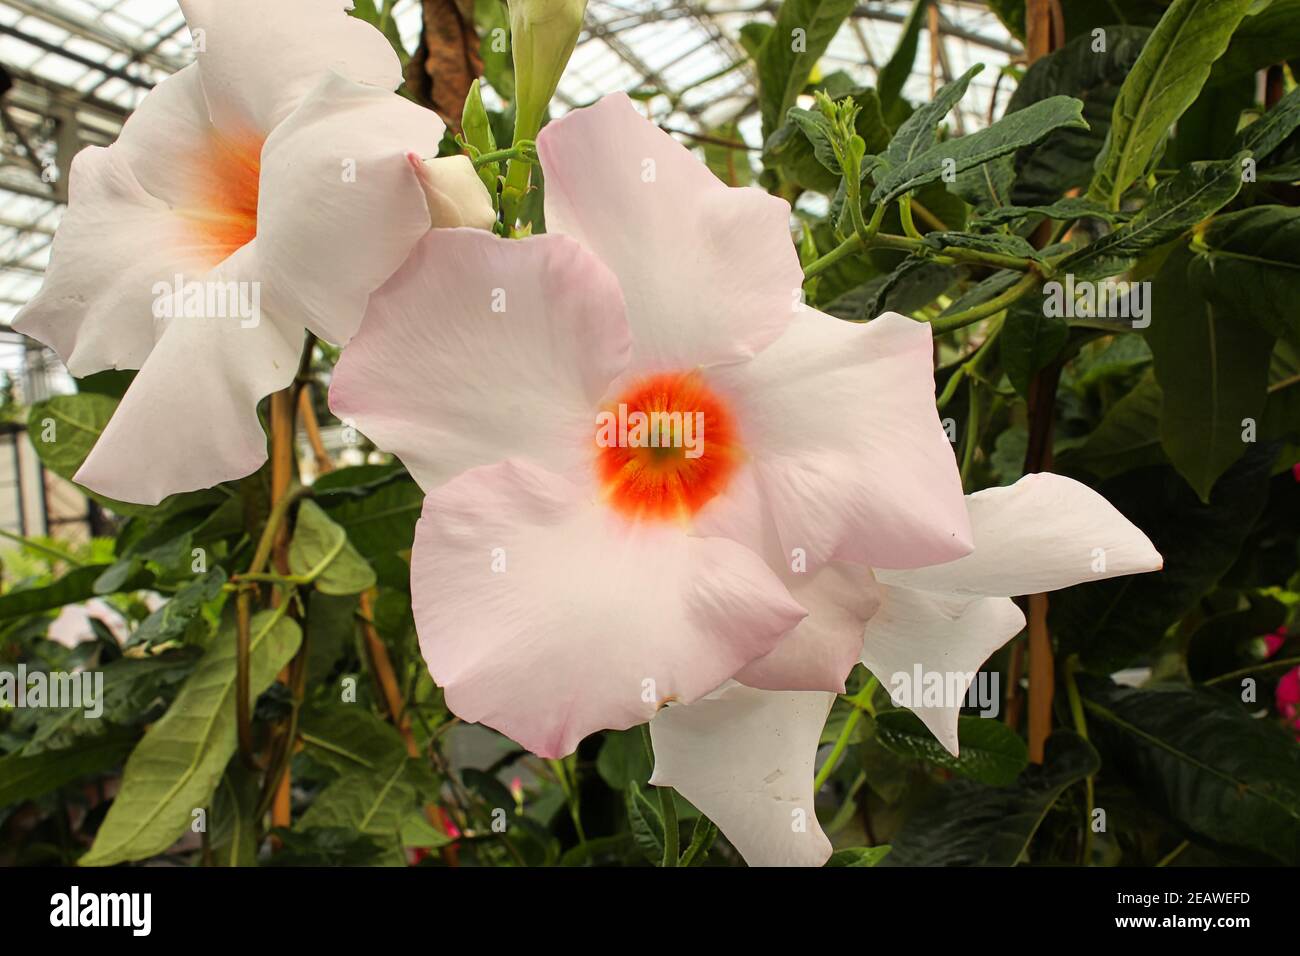 A blush mandevilla blossom with an orange center Stock Photo